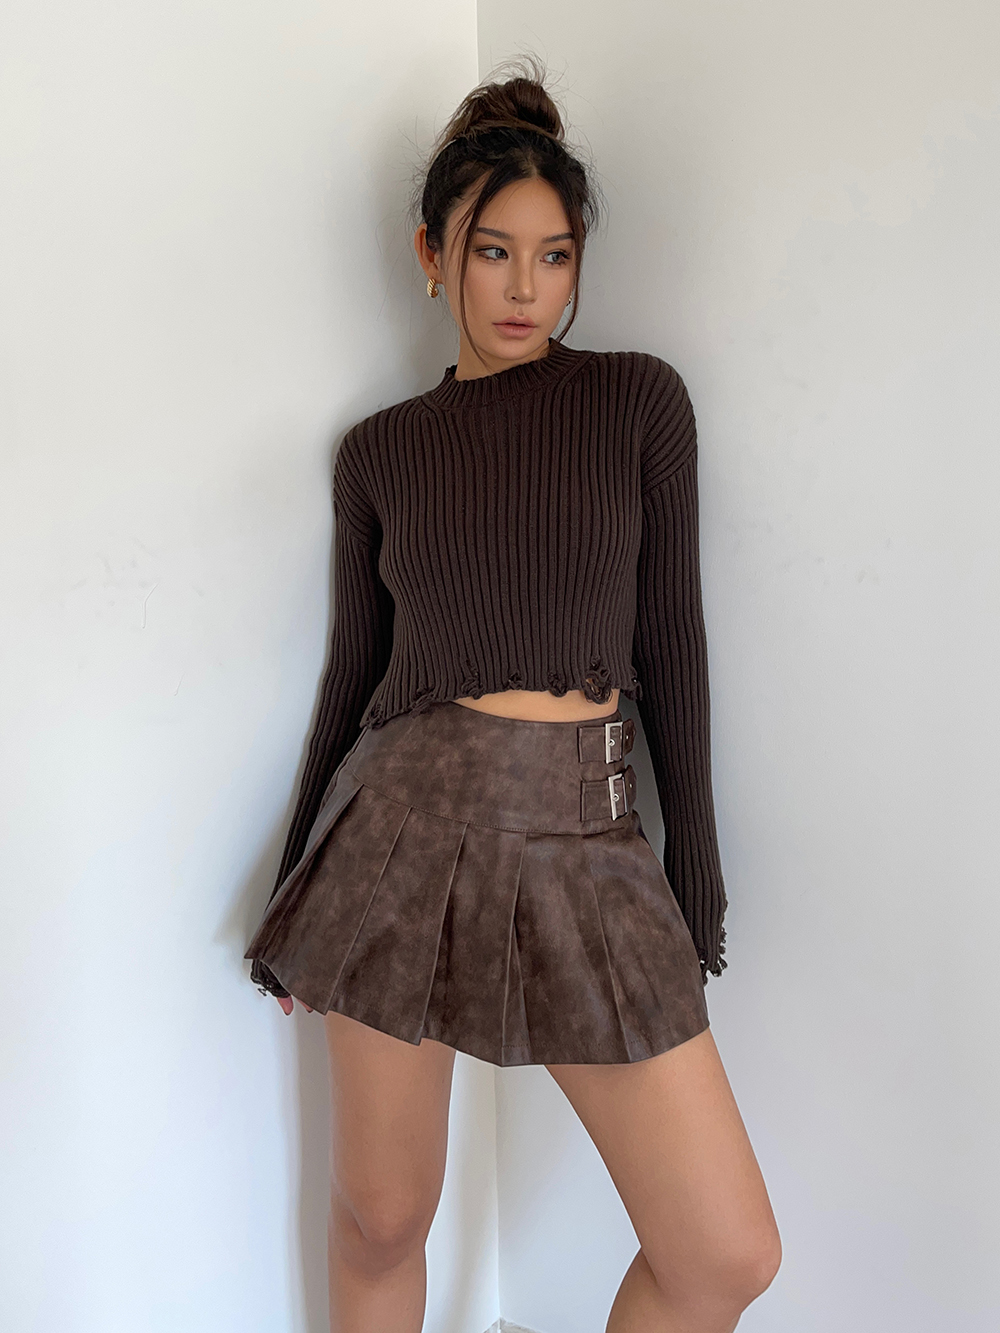 Maillard Coffee Color Leather Skirt Tie Dye Pu Skirt High Waist Pleated Skirt